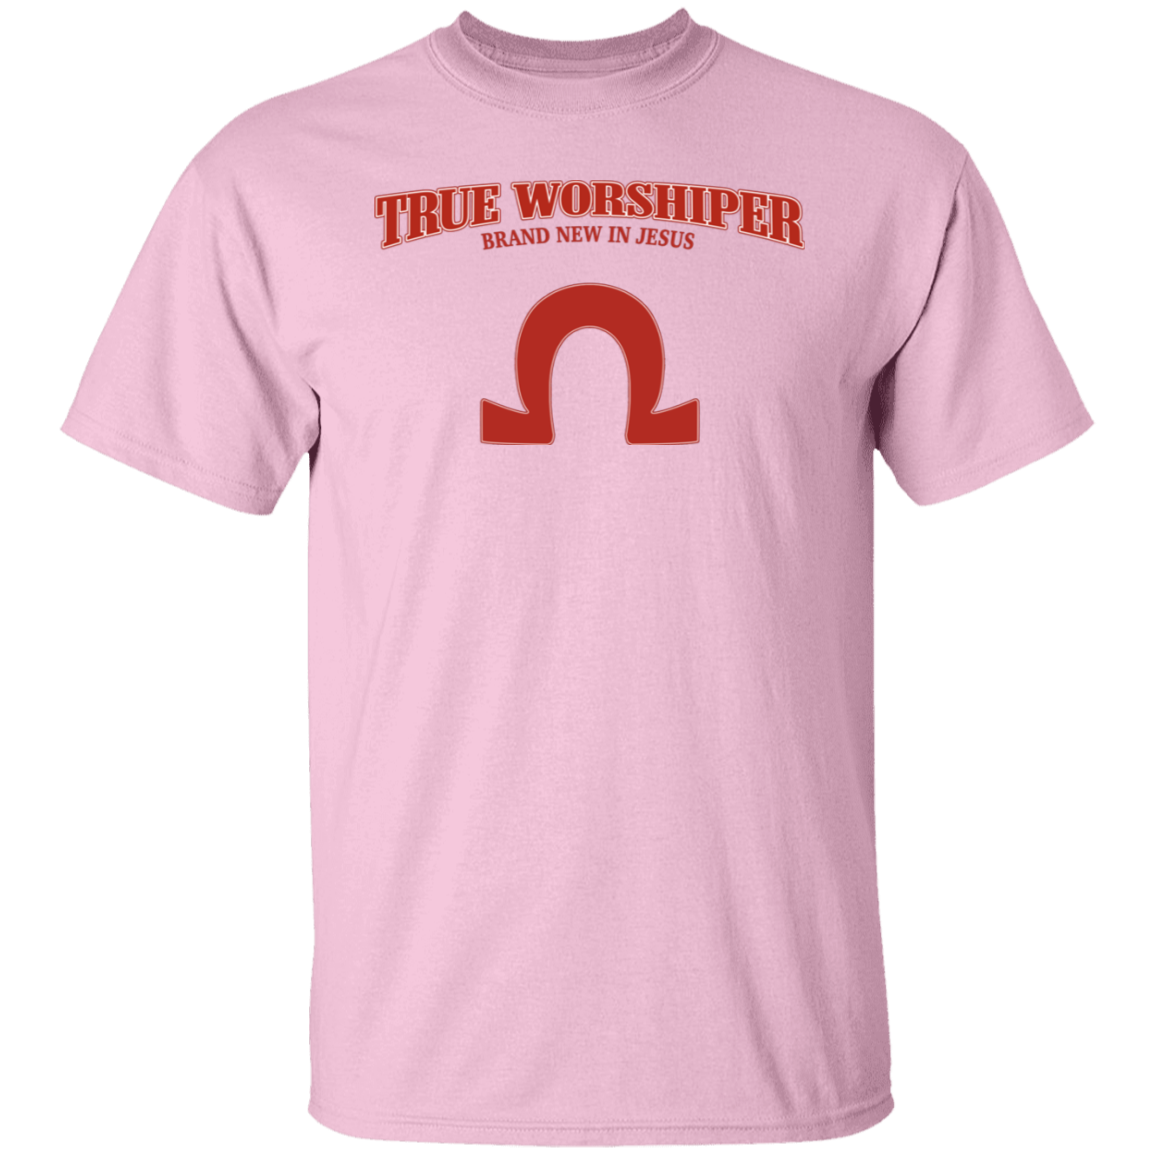 TRUE WORSHIPER TEE